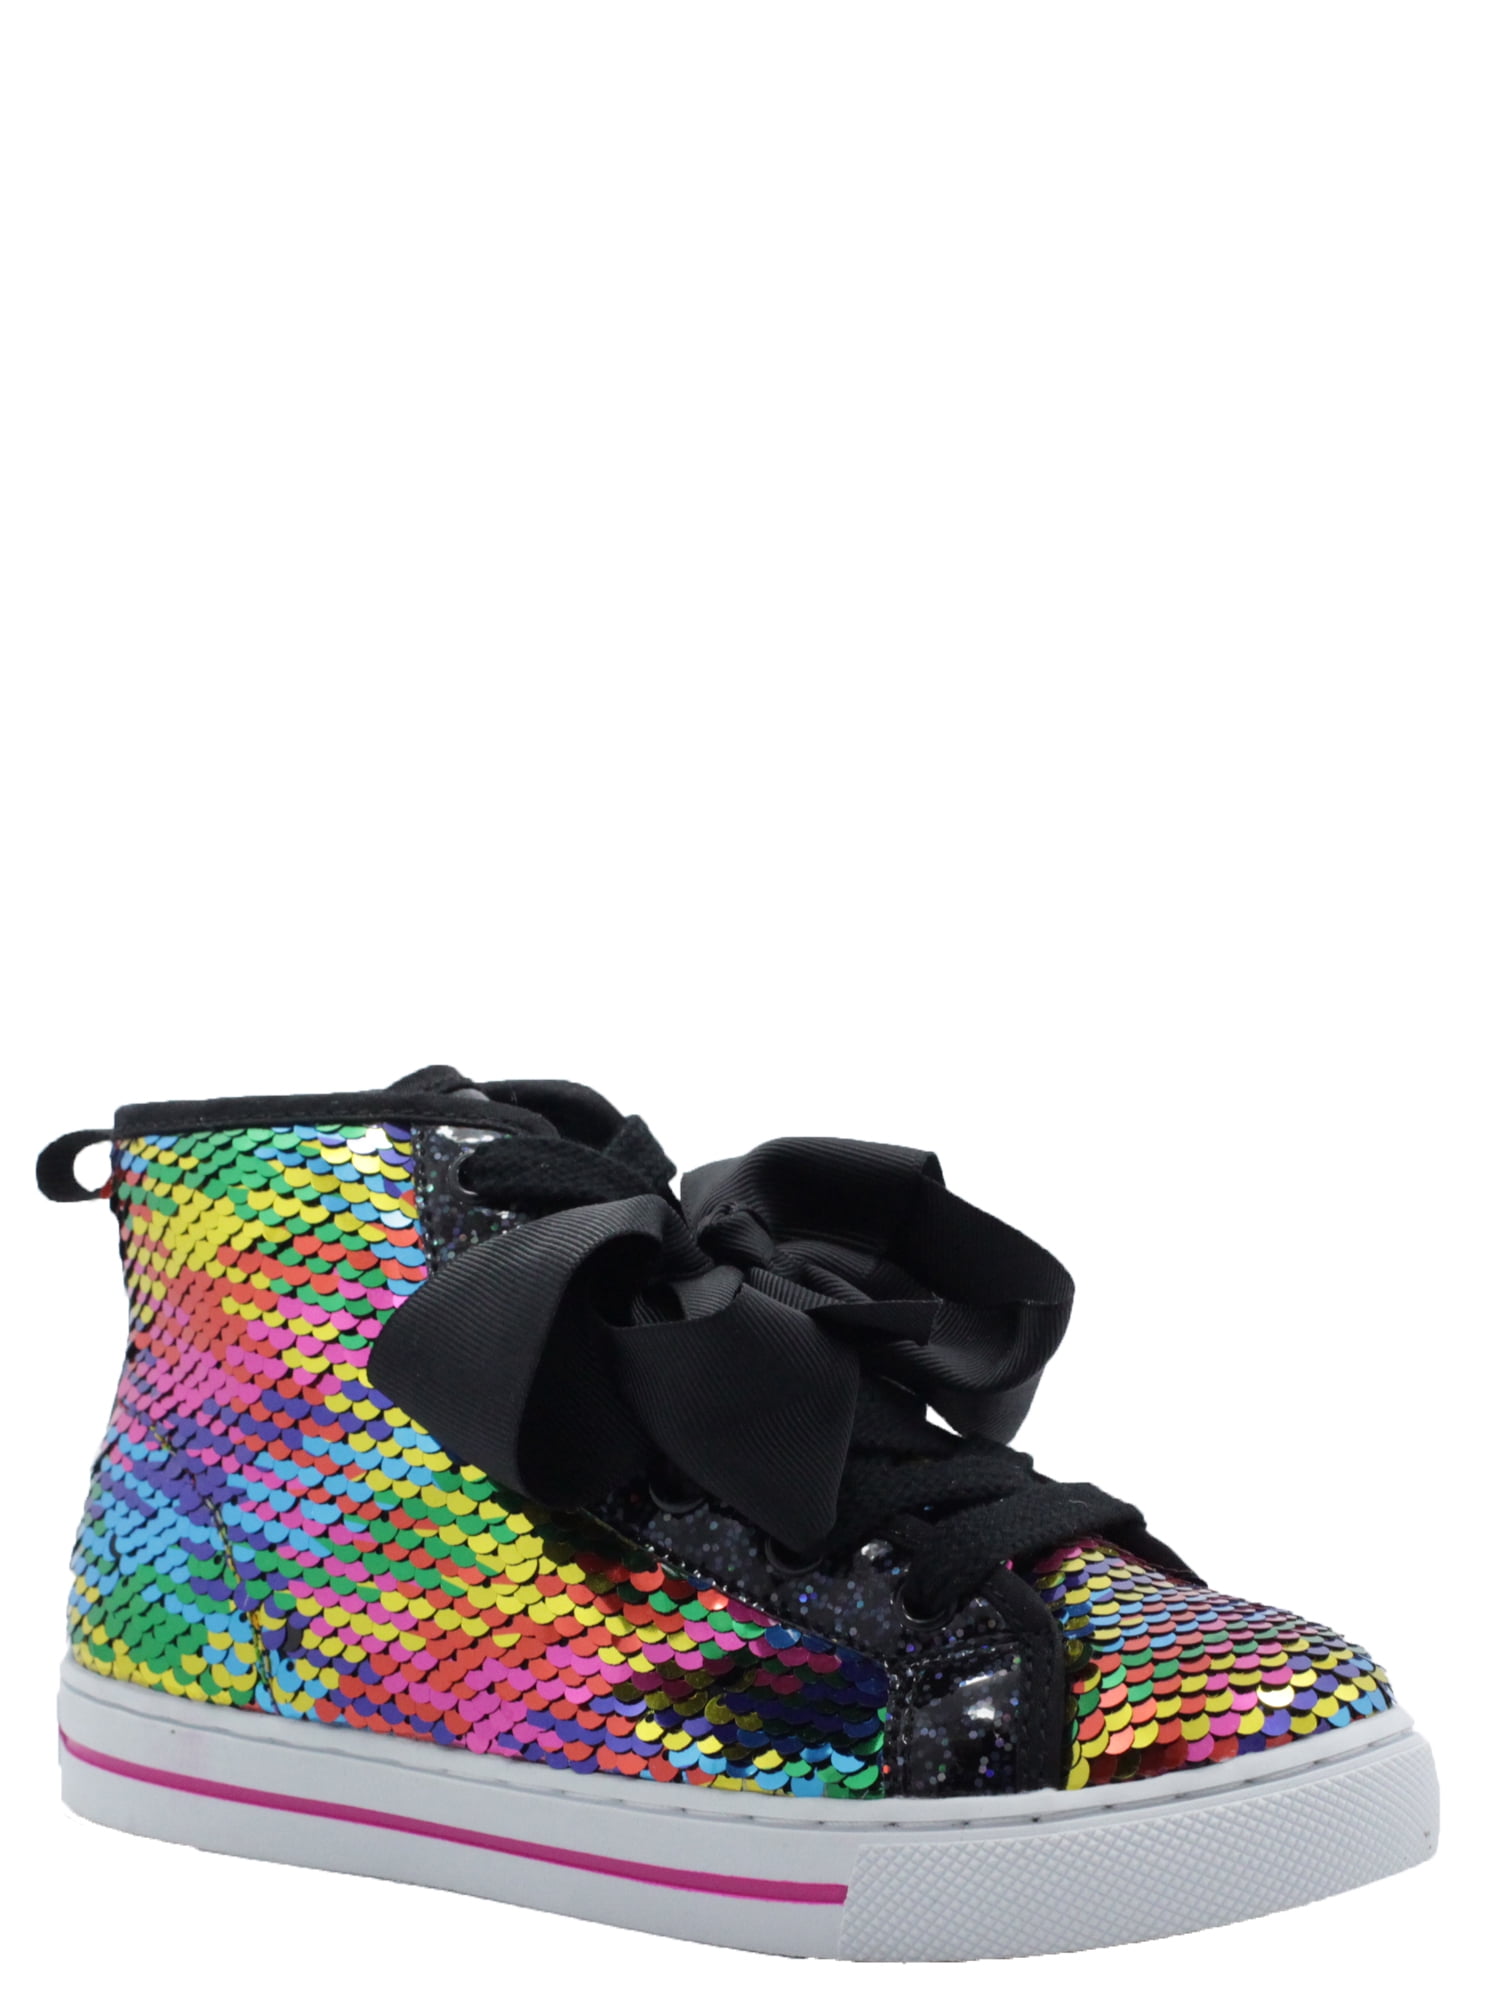 *SALE* Jojo Siwa Glitter Rainbow Bow Shoes High Top Sneakers Size 12.